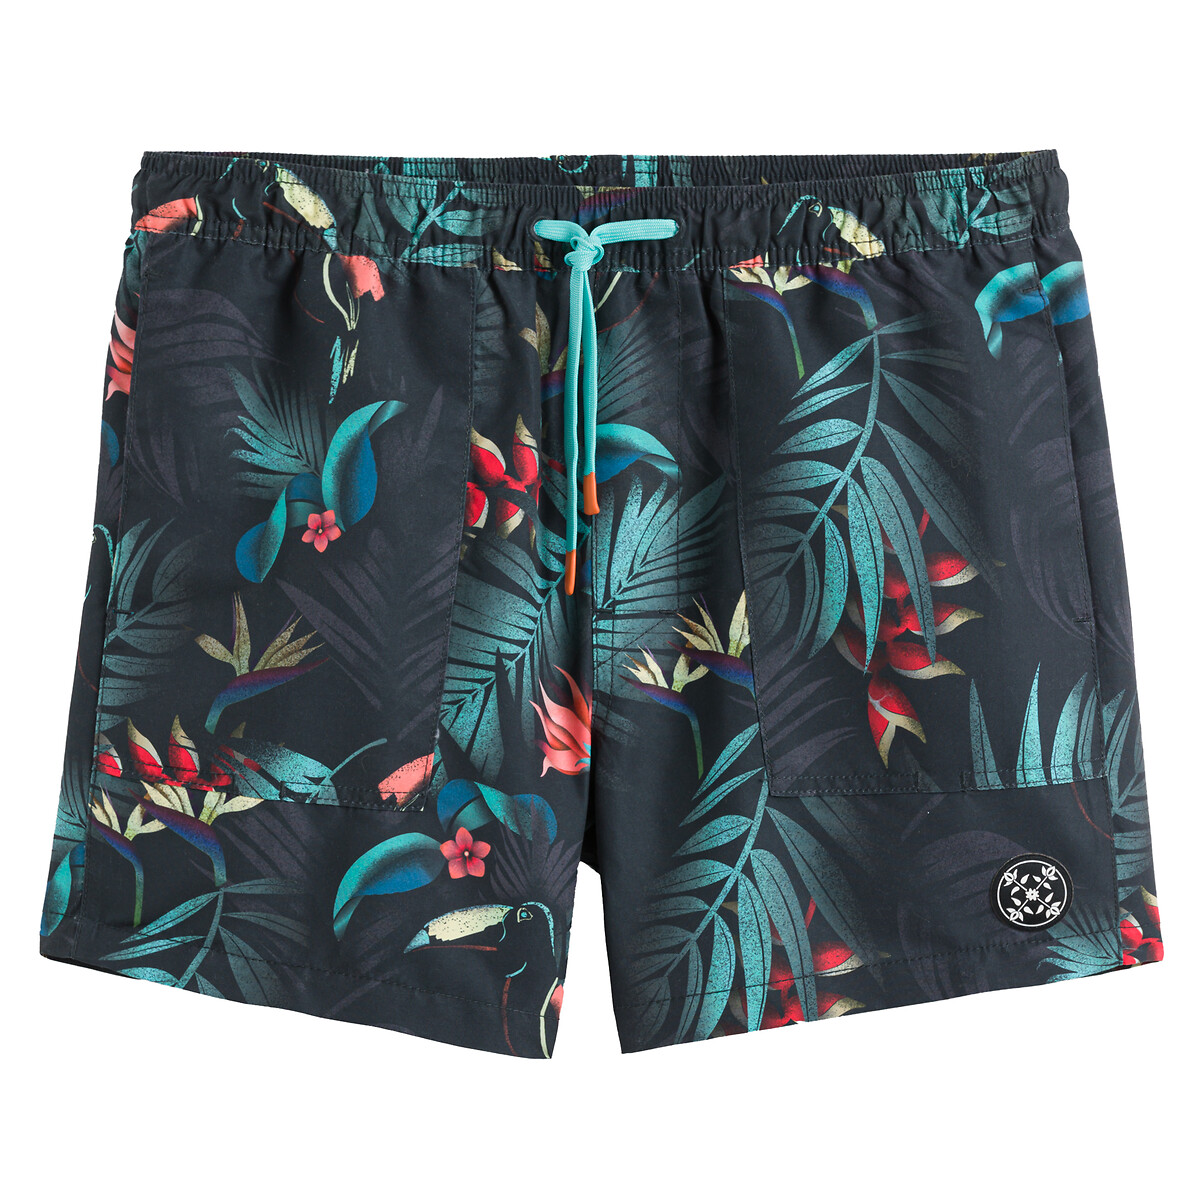 Swim Shorts in Floral/Leaf Print